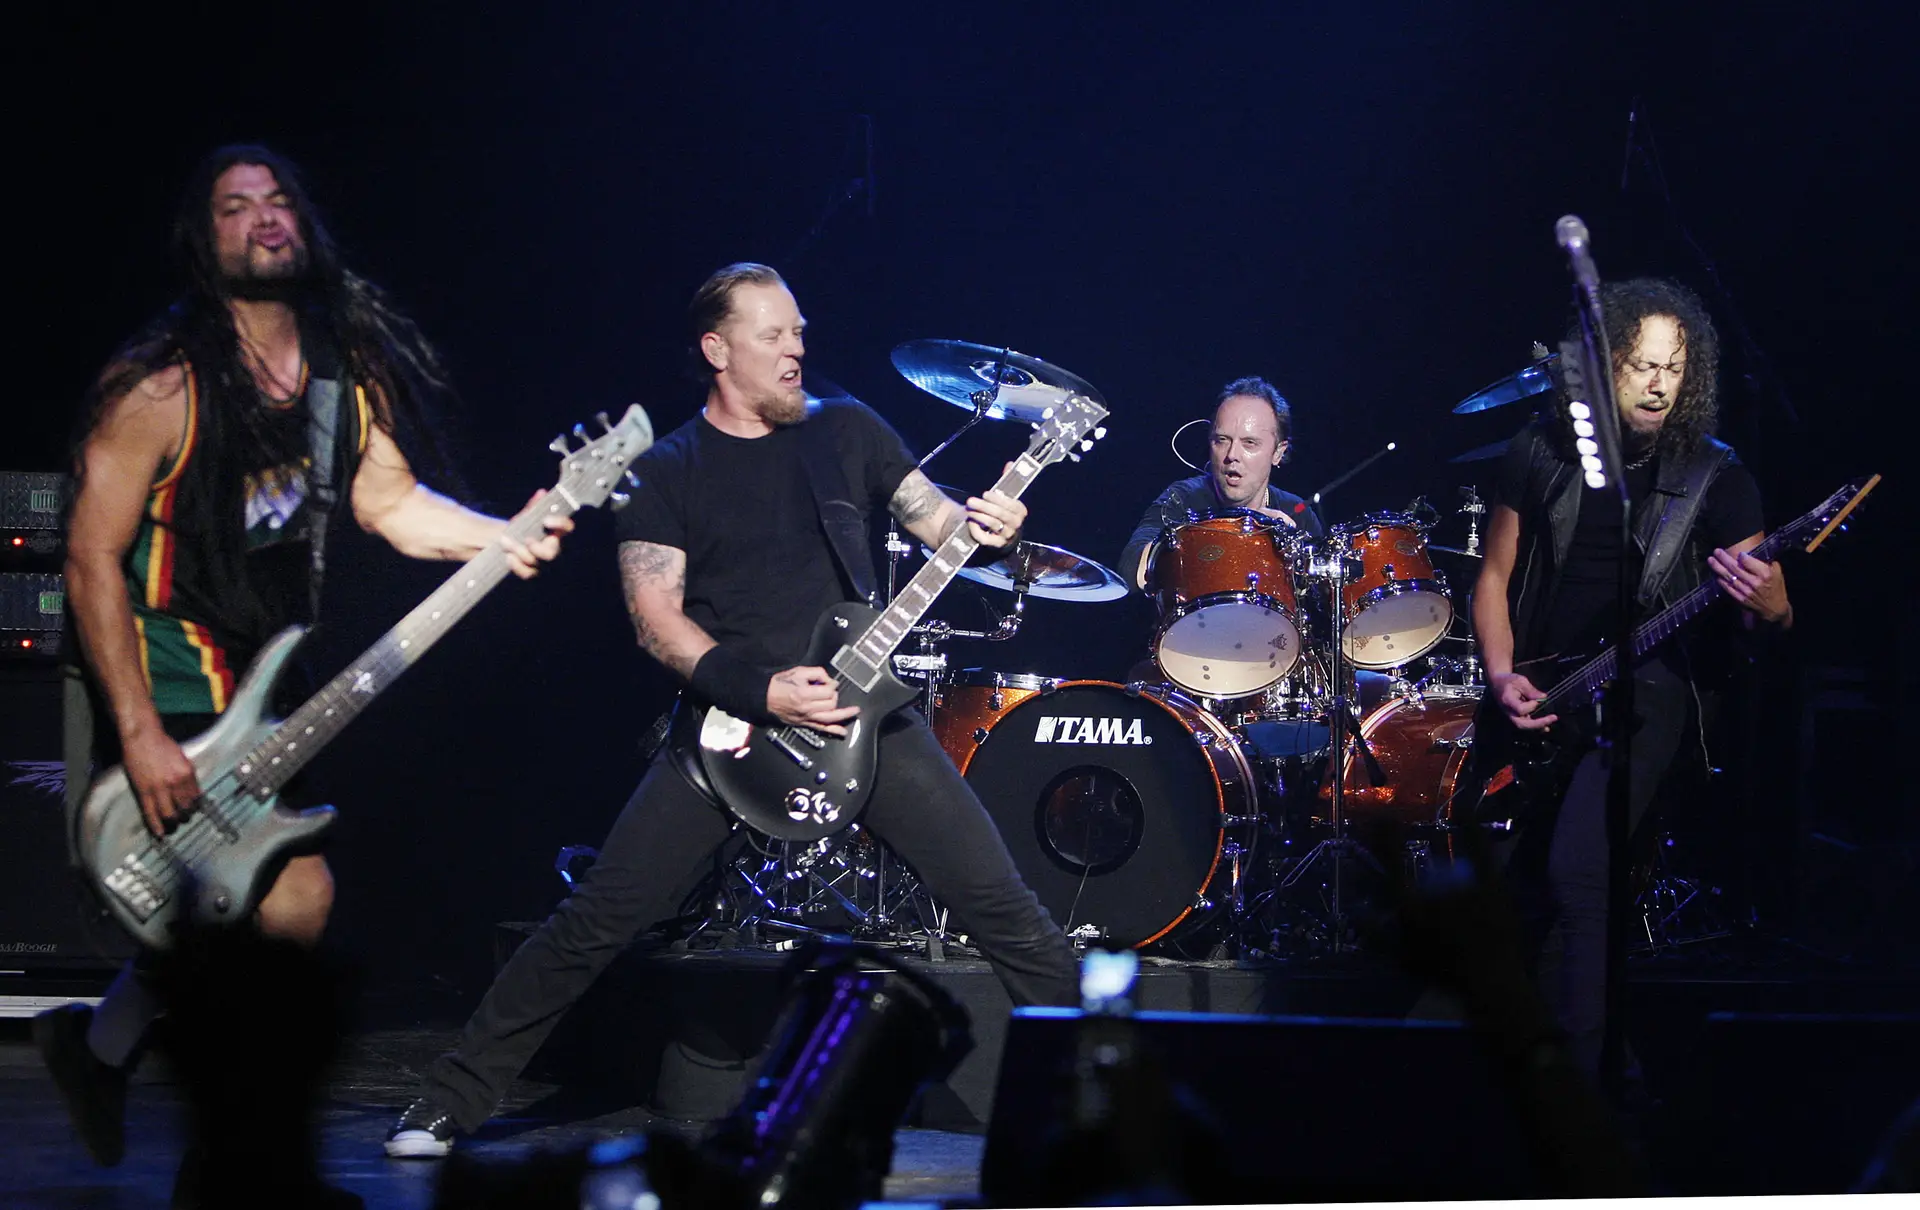 Só 5 artistas venderam mais bilhetes do que os Metallica nos últimos 40 anos